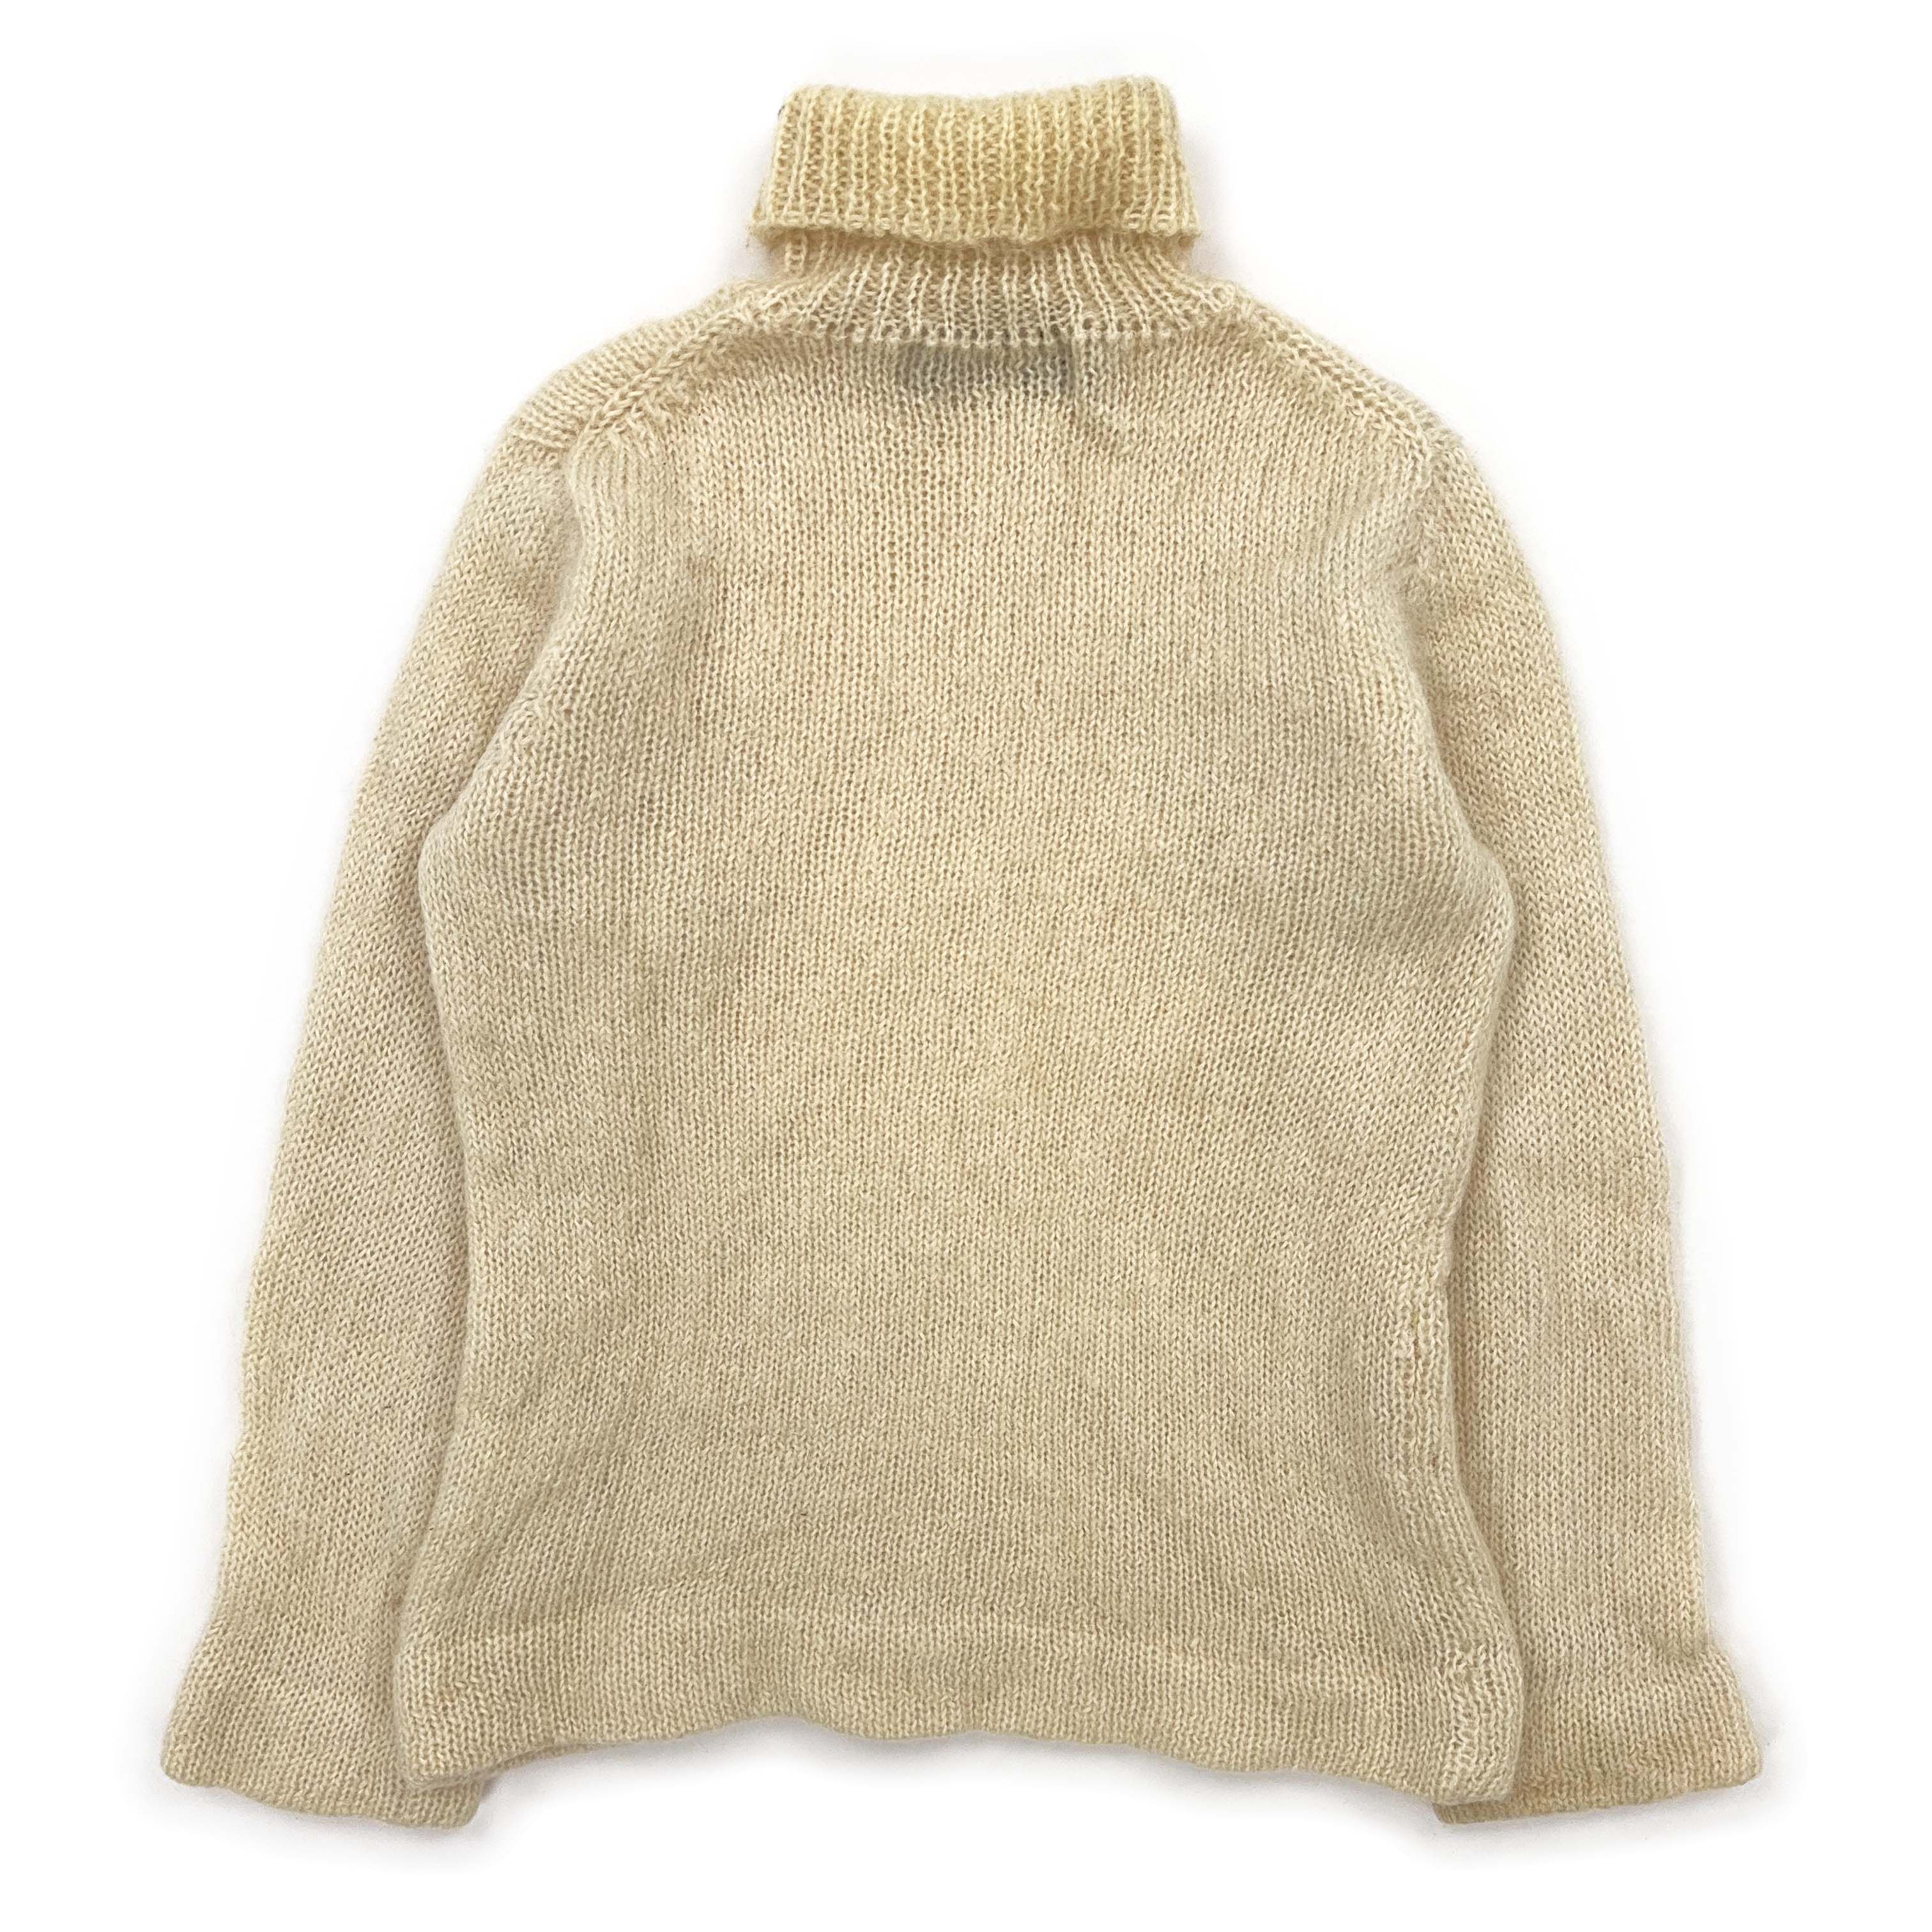 AW95 Knit Wool-Nylon Turtleneck Sweater - 2